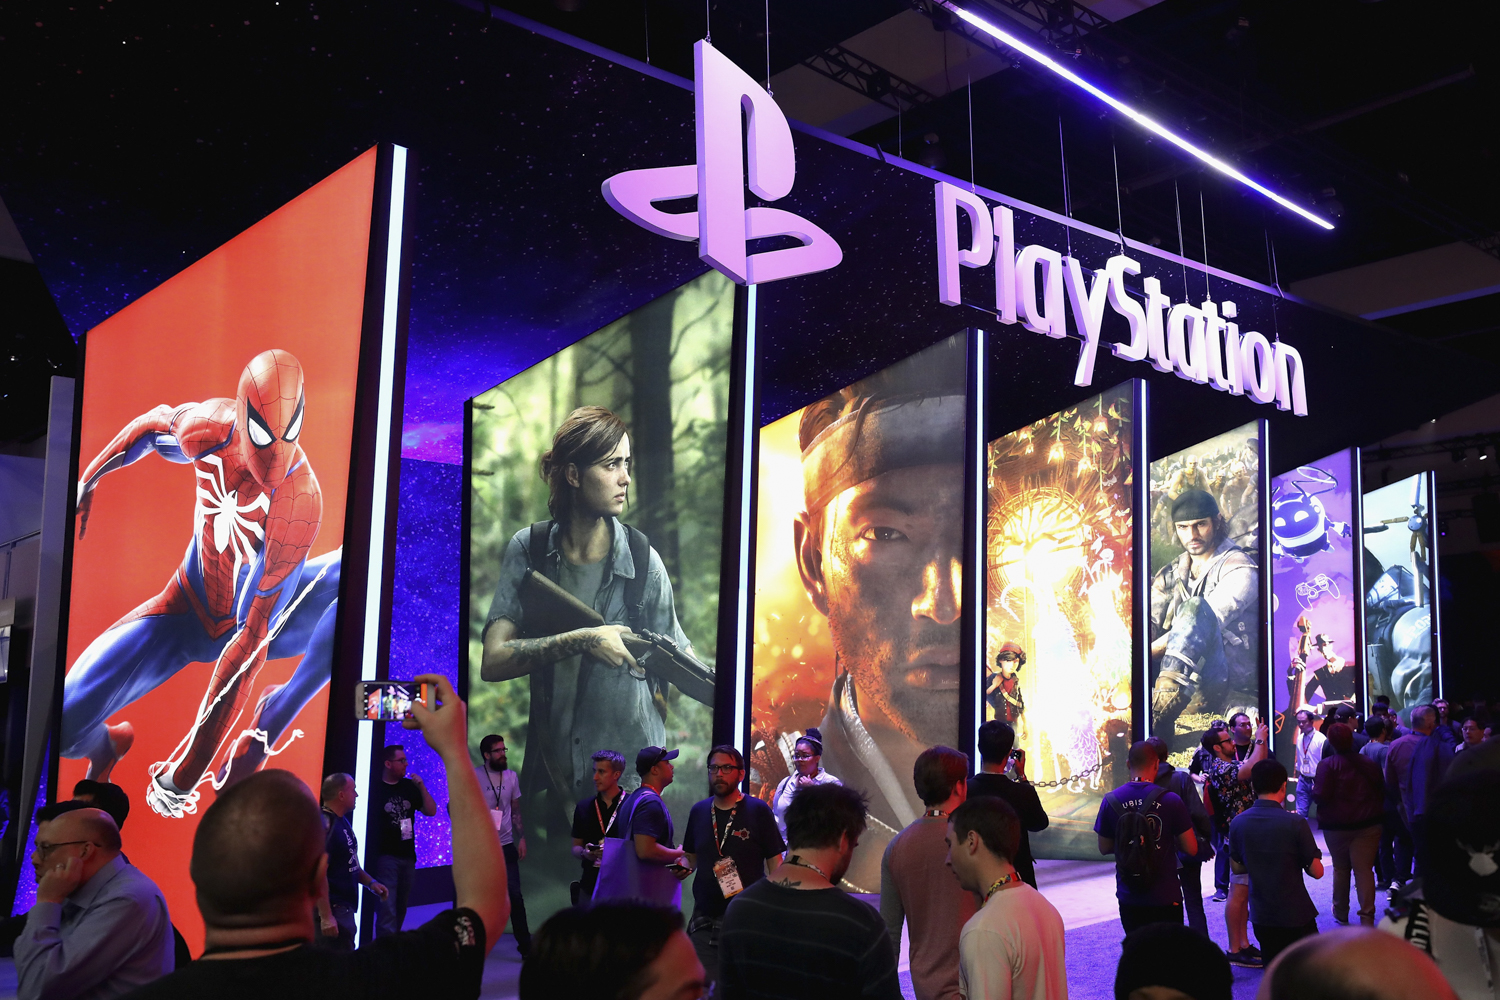 Sony E3 shockers still coming? - CNET